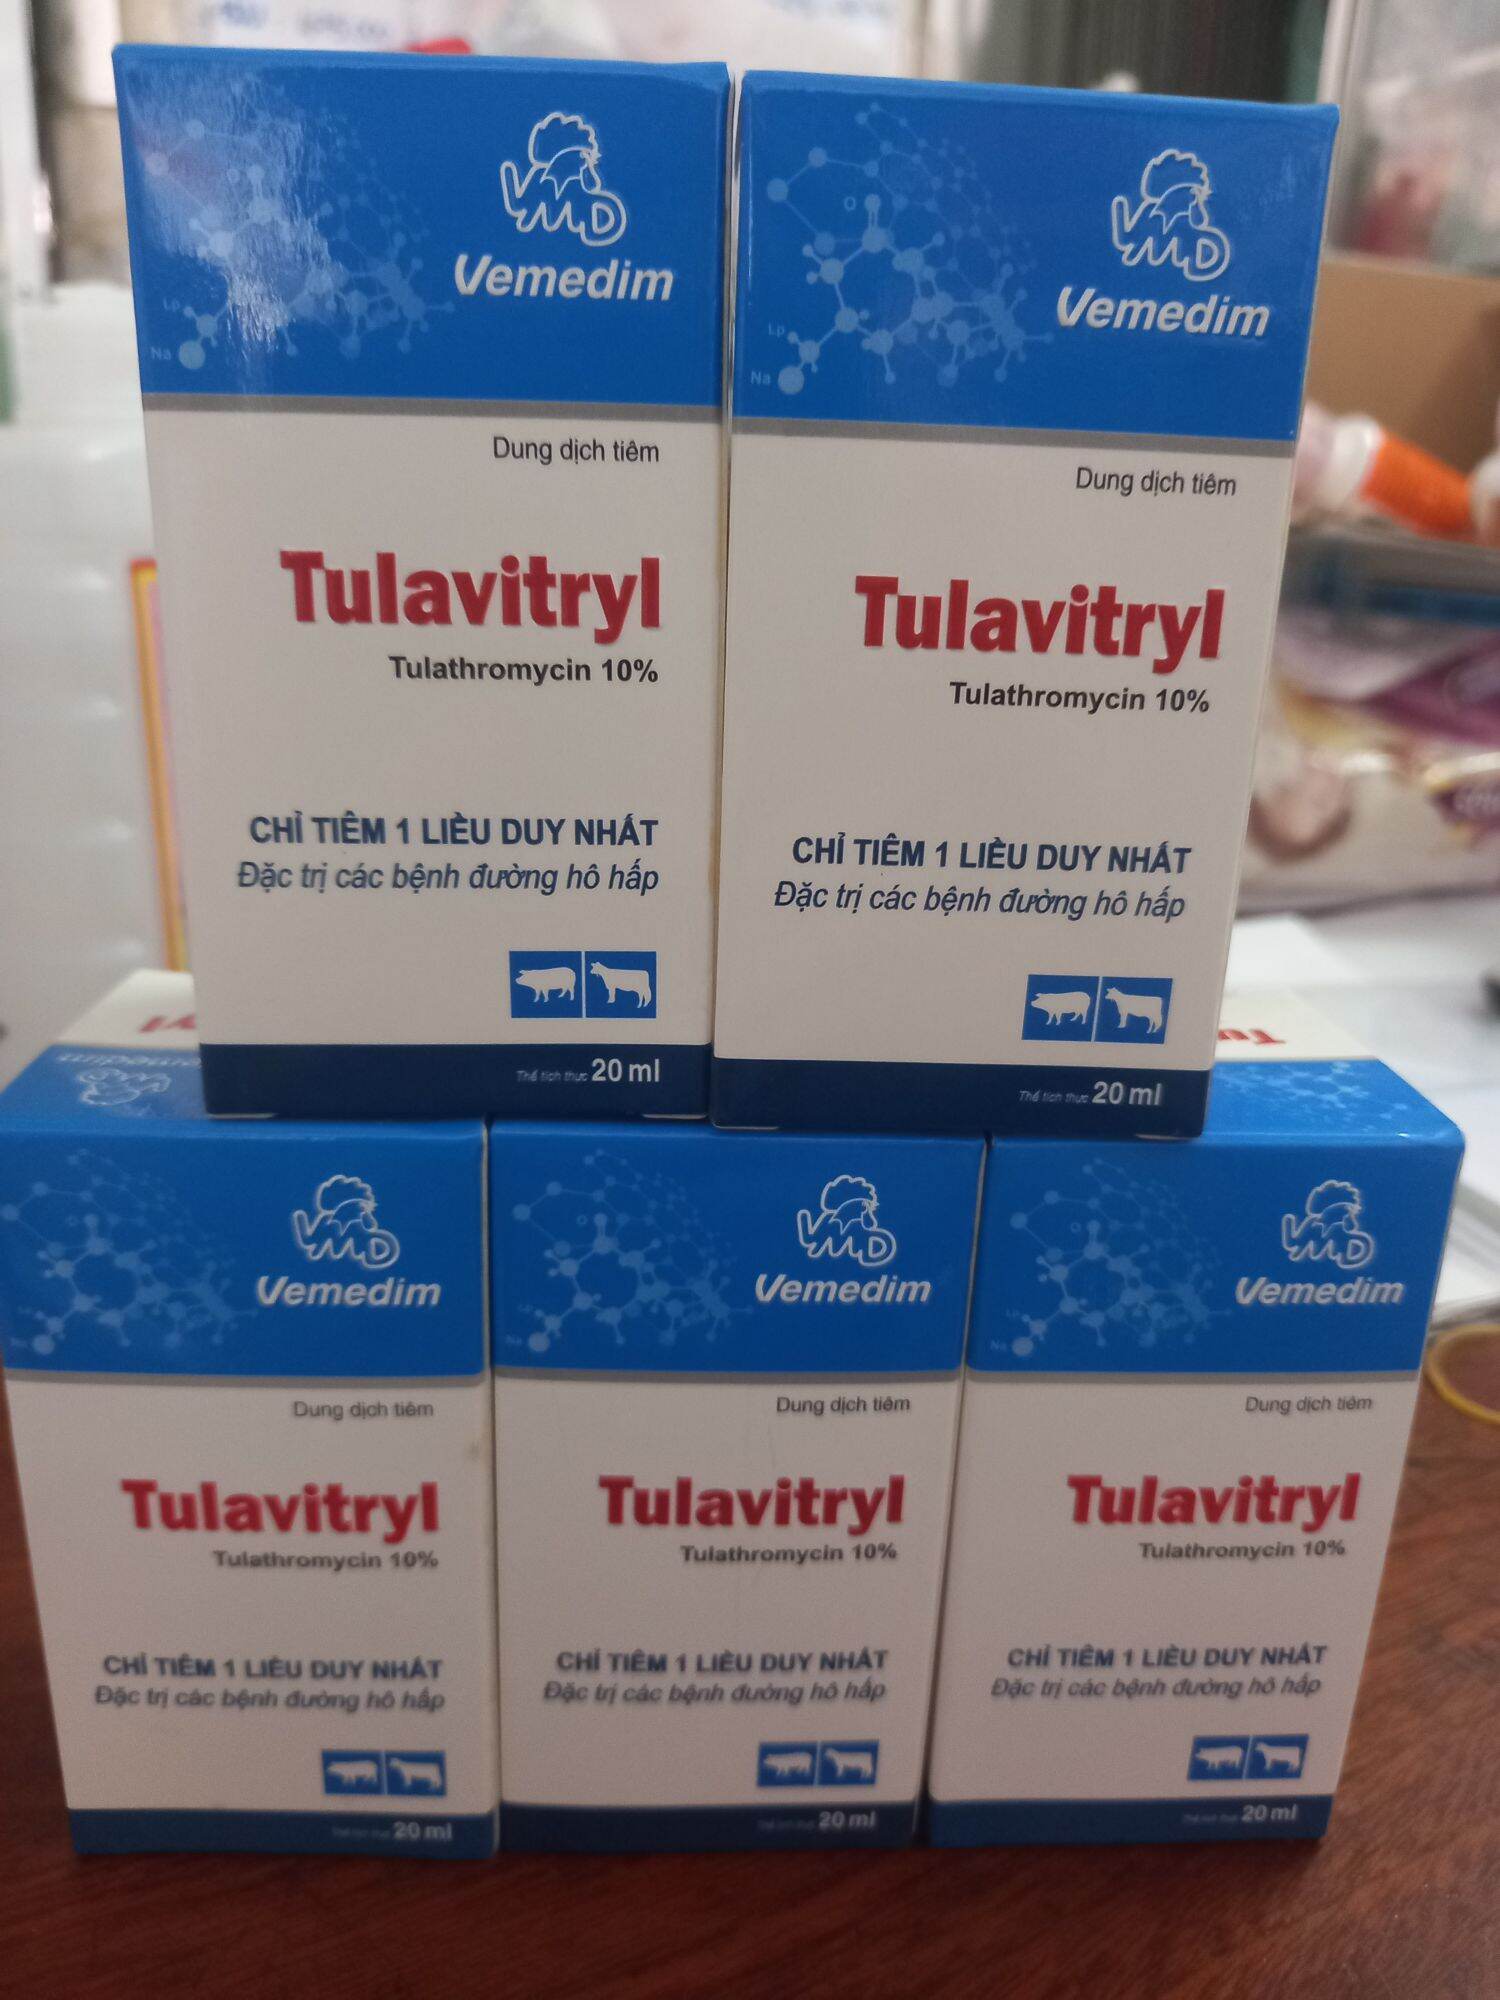 Vemedim-Tulavitryl,Chai 20ml